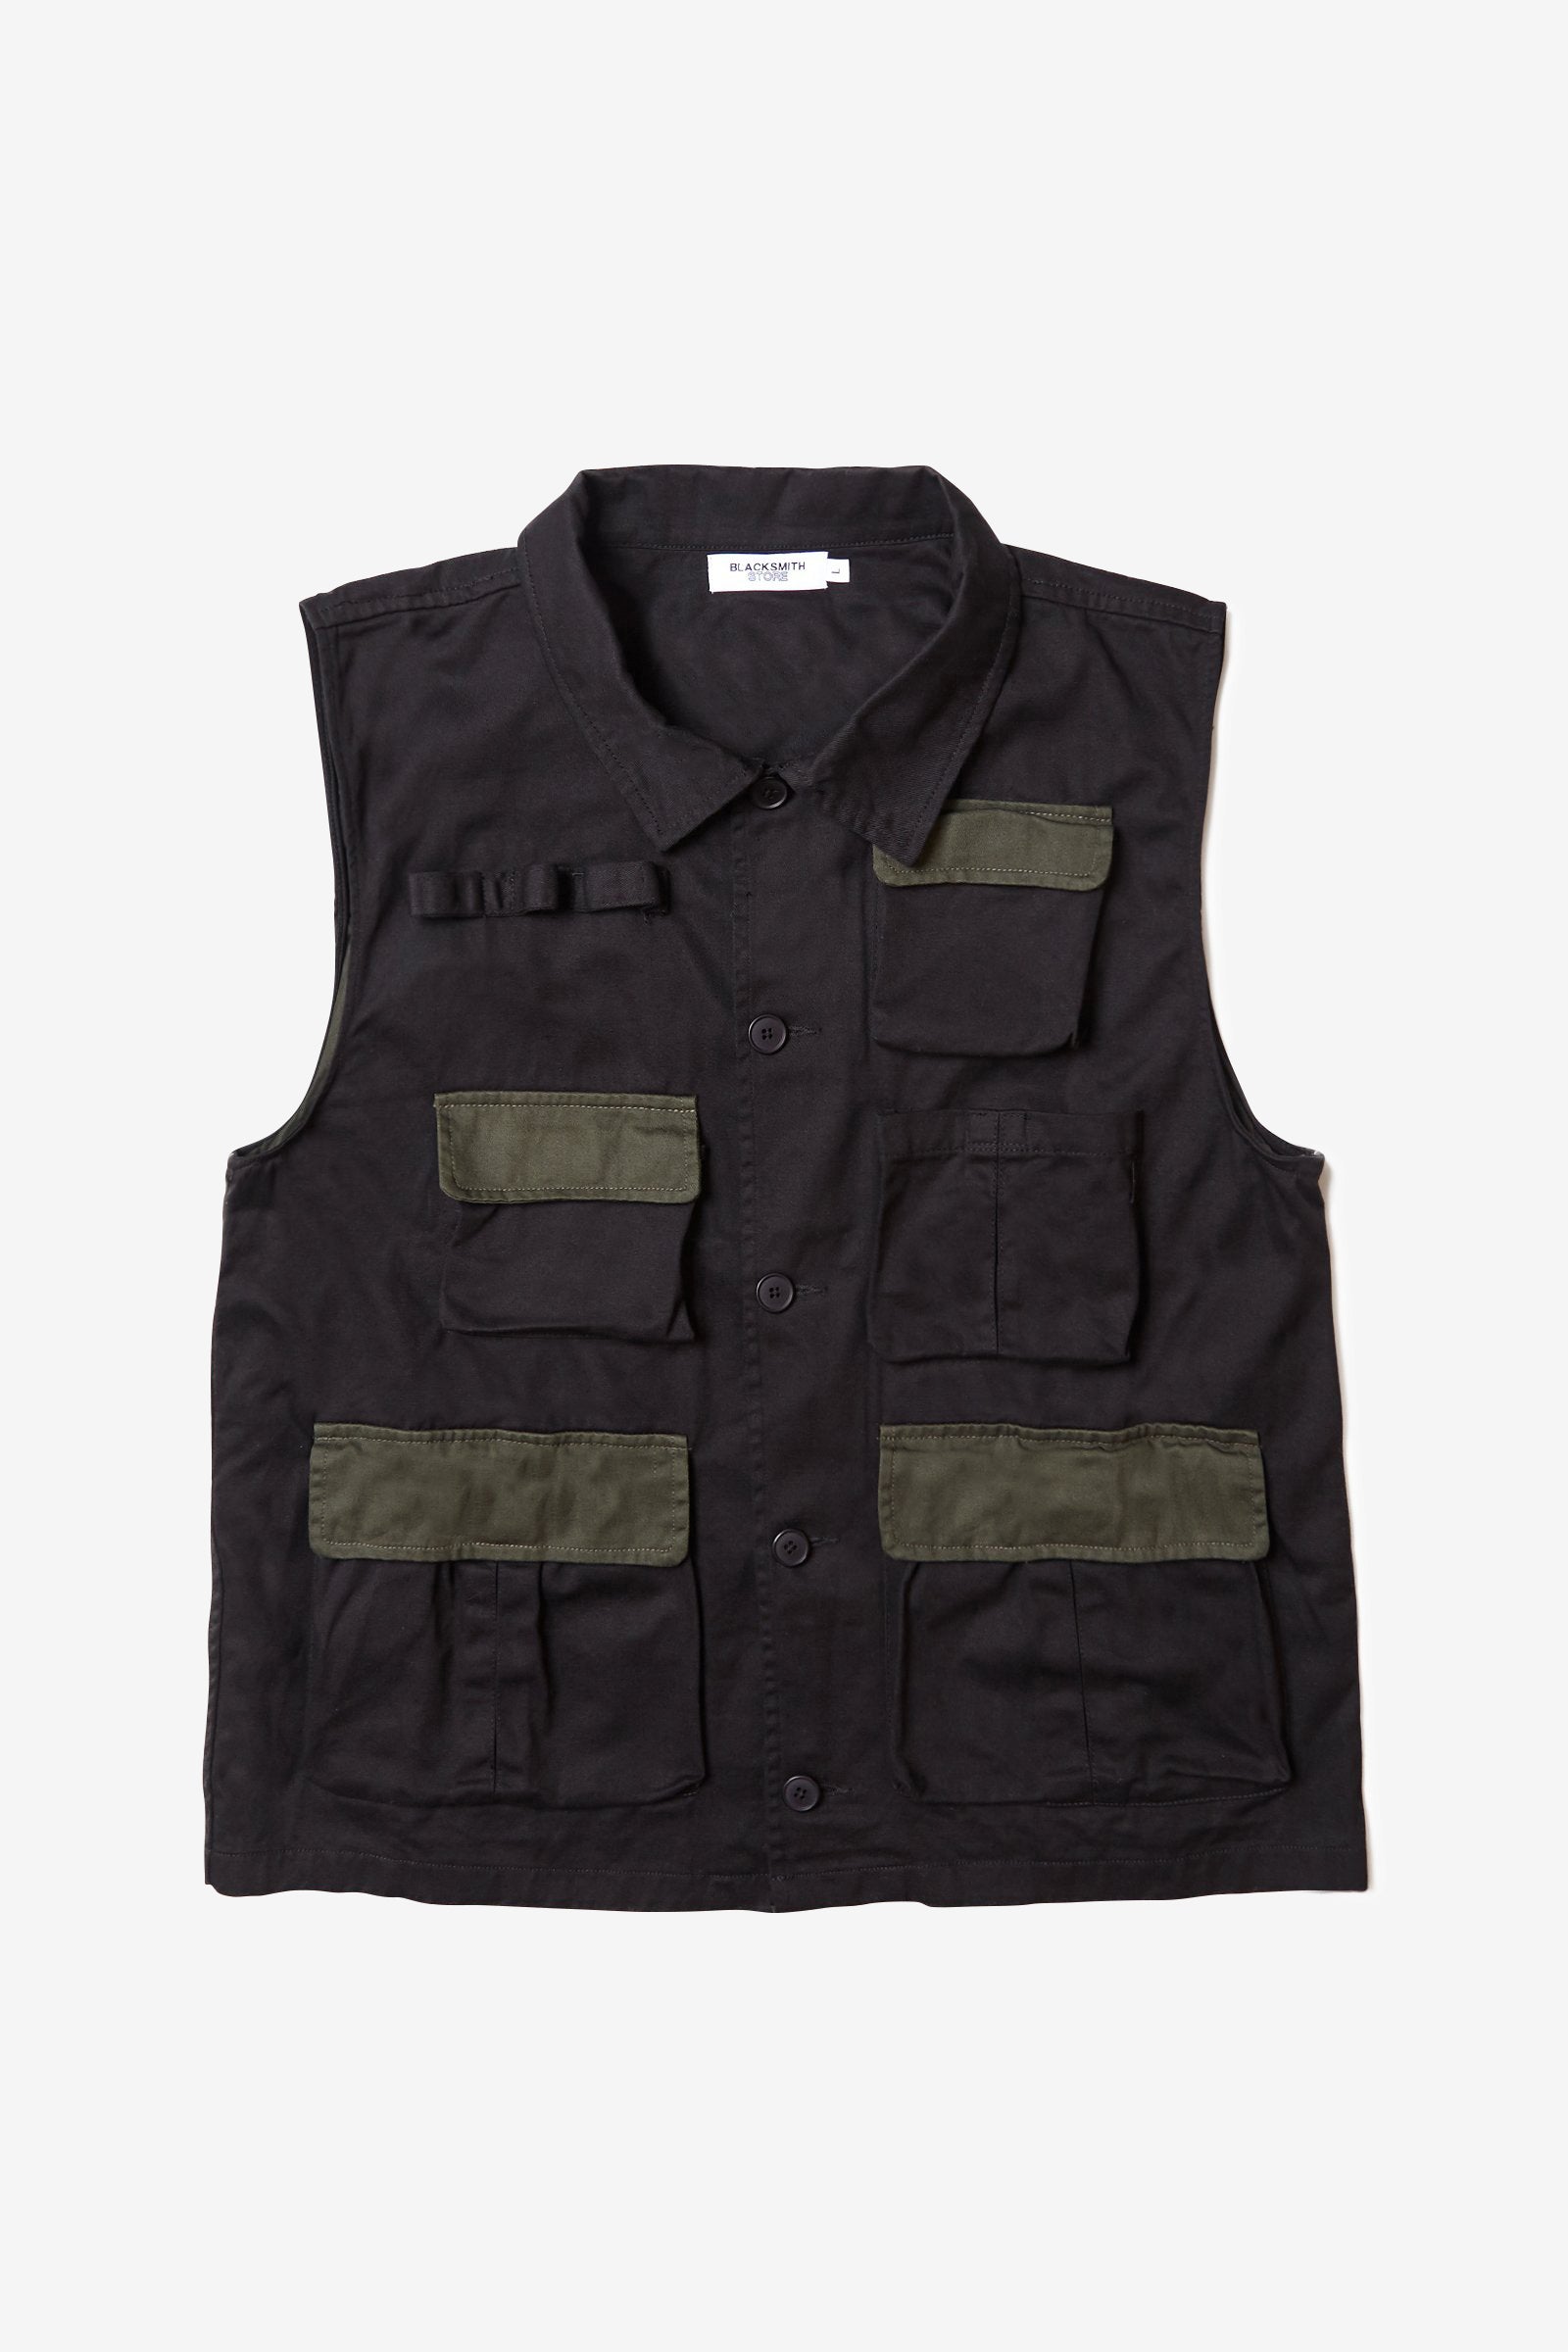 Blacksmith - Tactical Utility Vest - Military